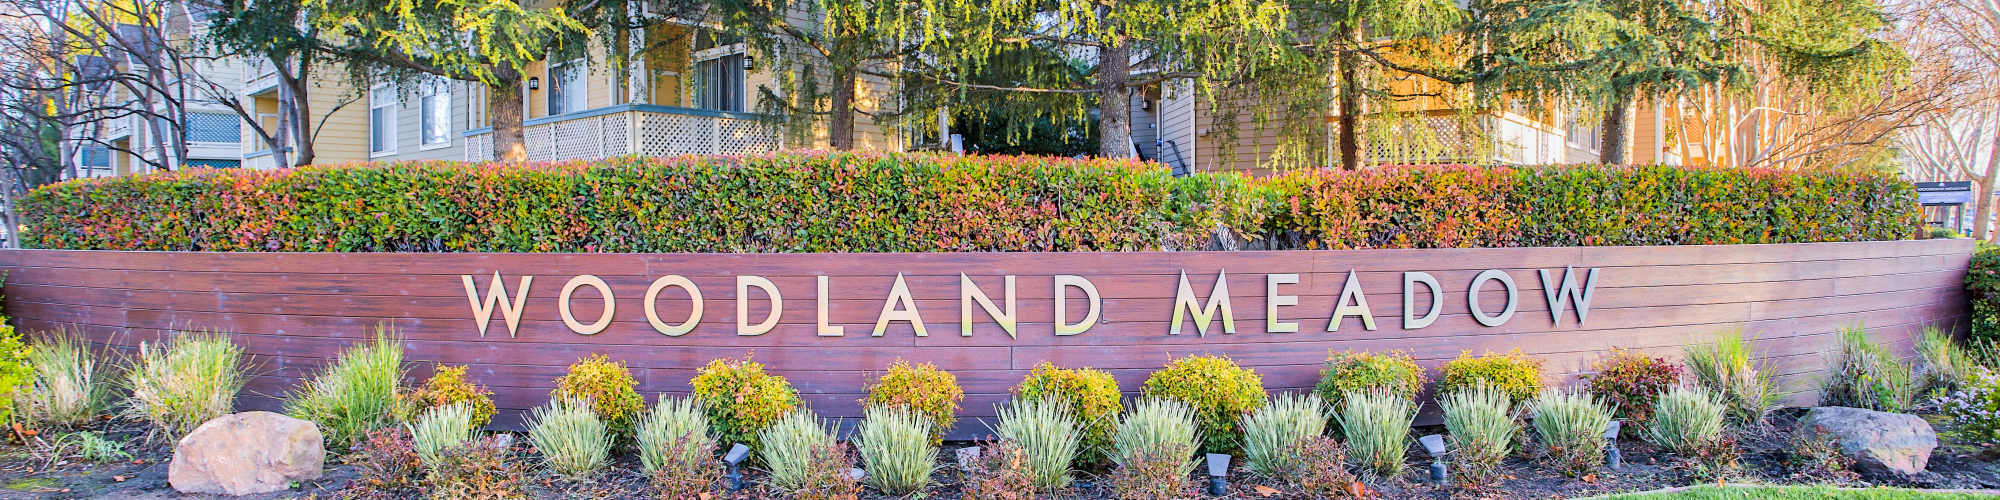 Gallery | Woodland Meadow in San Jose, California